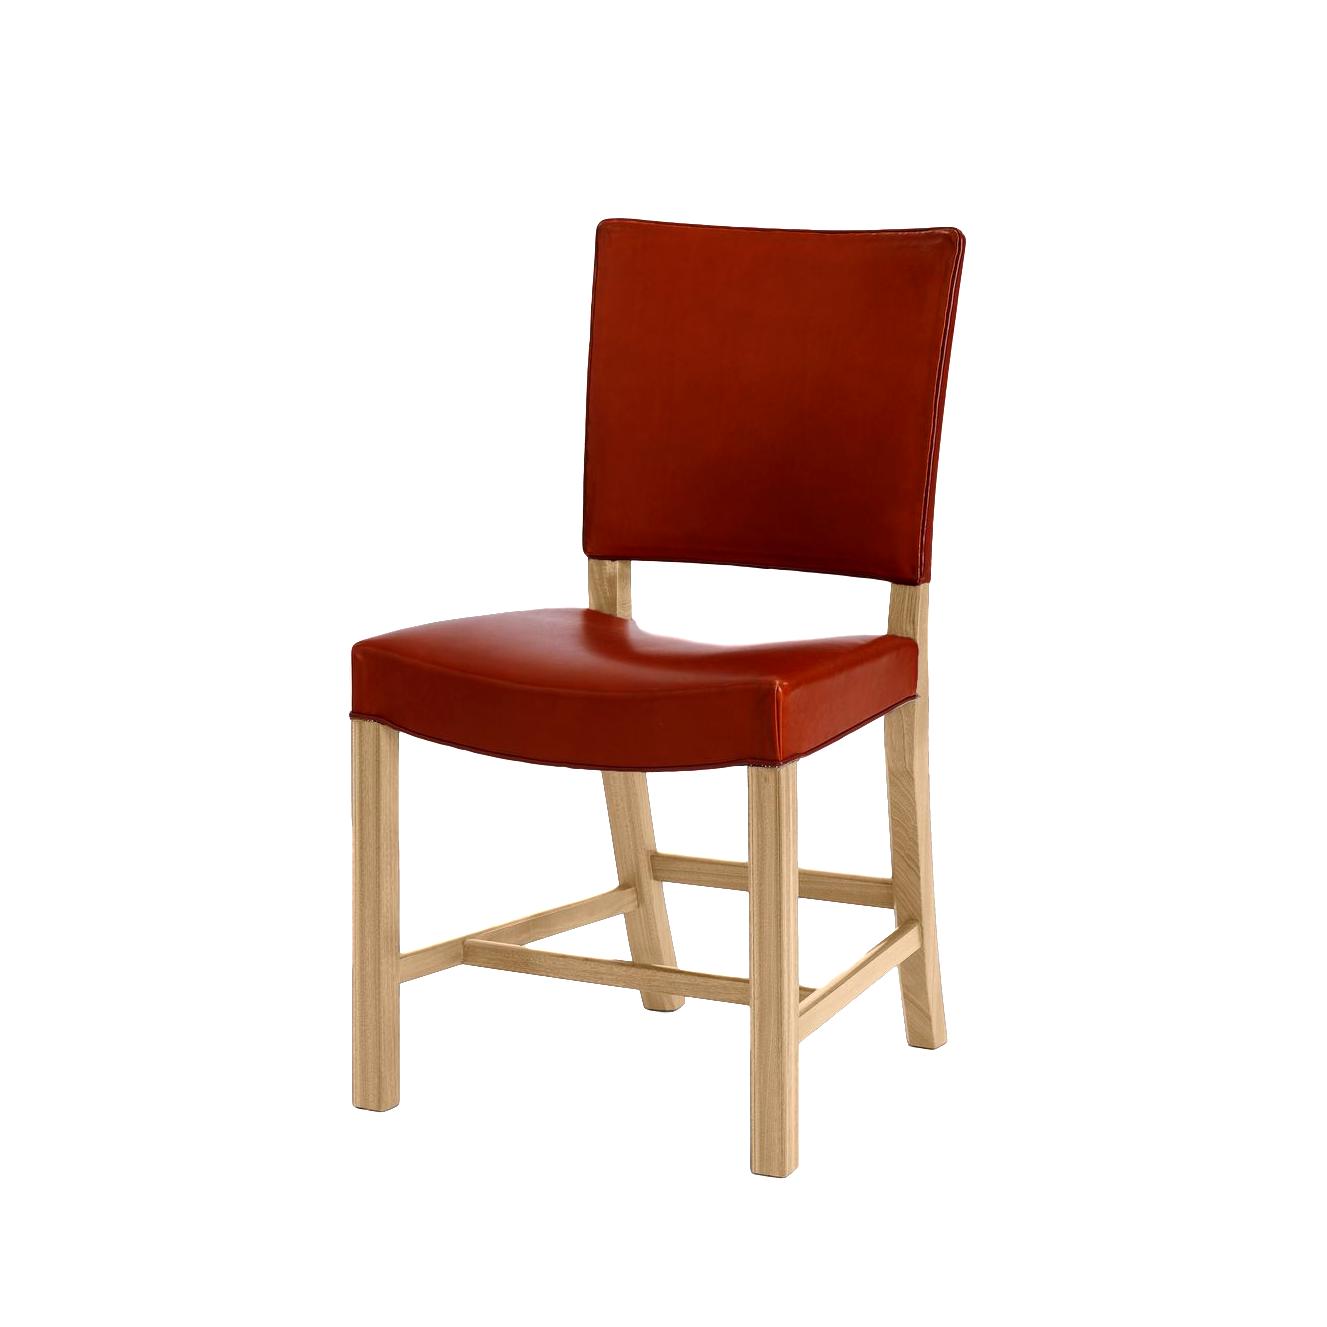 Carl Hansen Kk39490 Small Red Chair, Oak Soaped/Black Leather